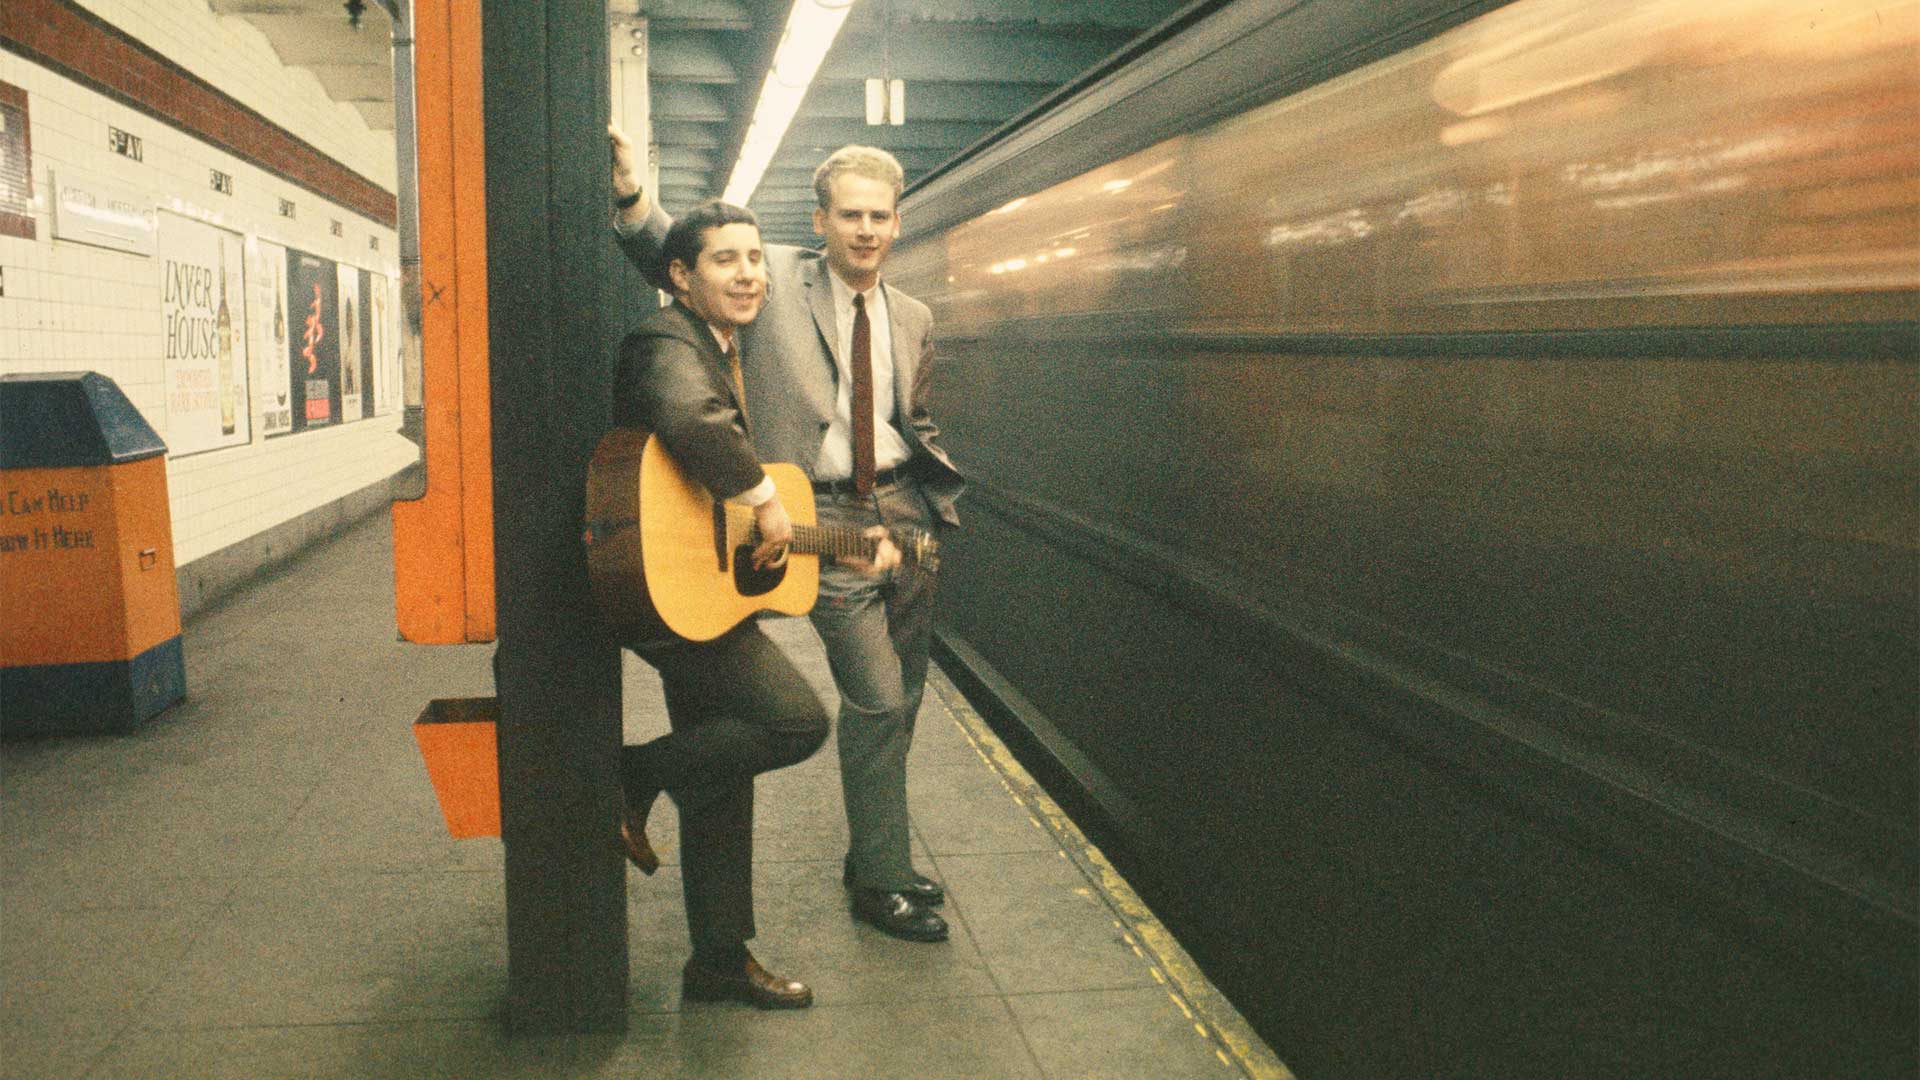 Simon and Garfunkel image subway HD wallpaper and background photo